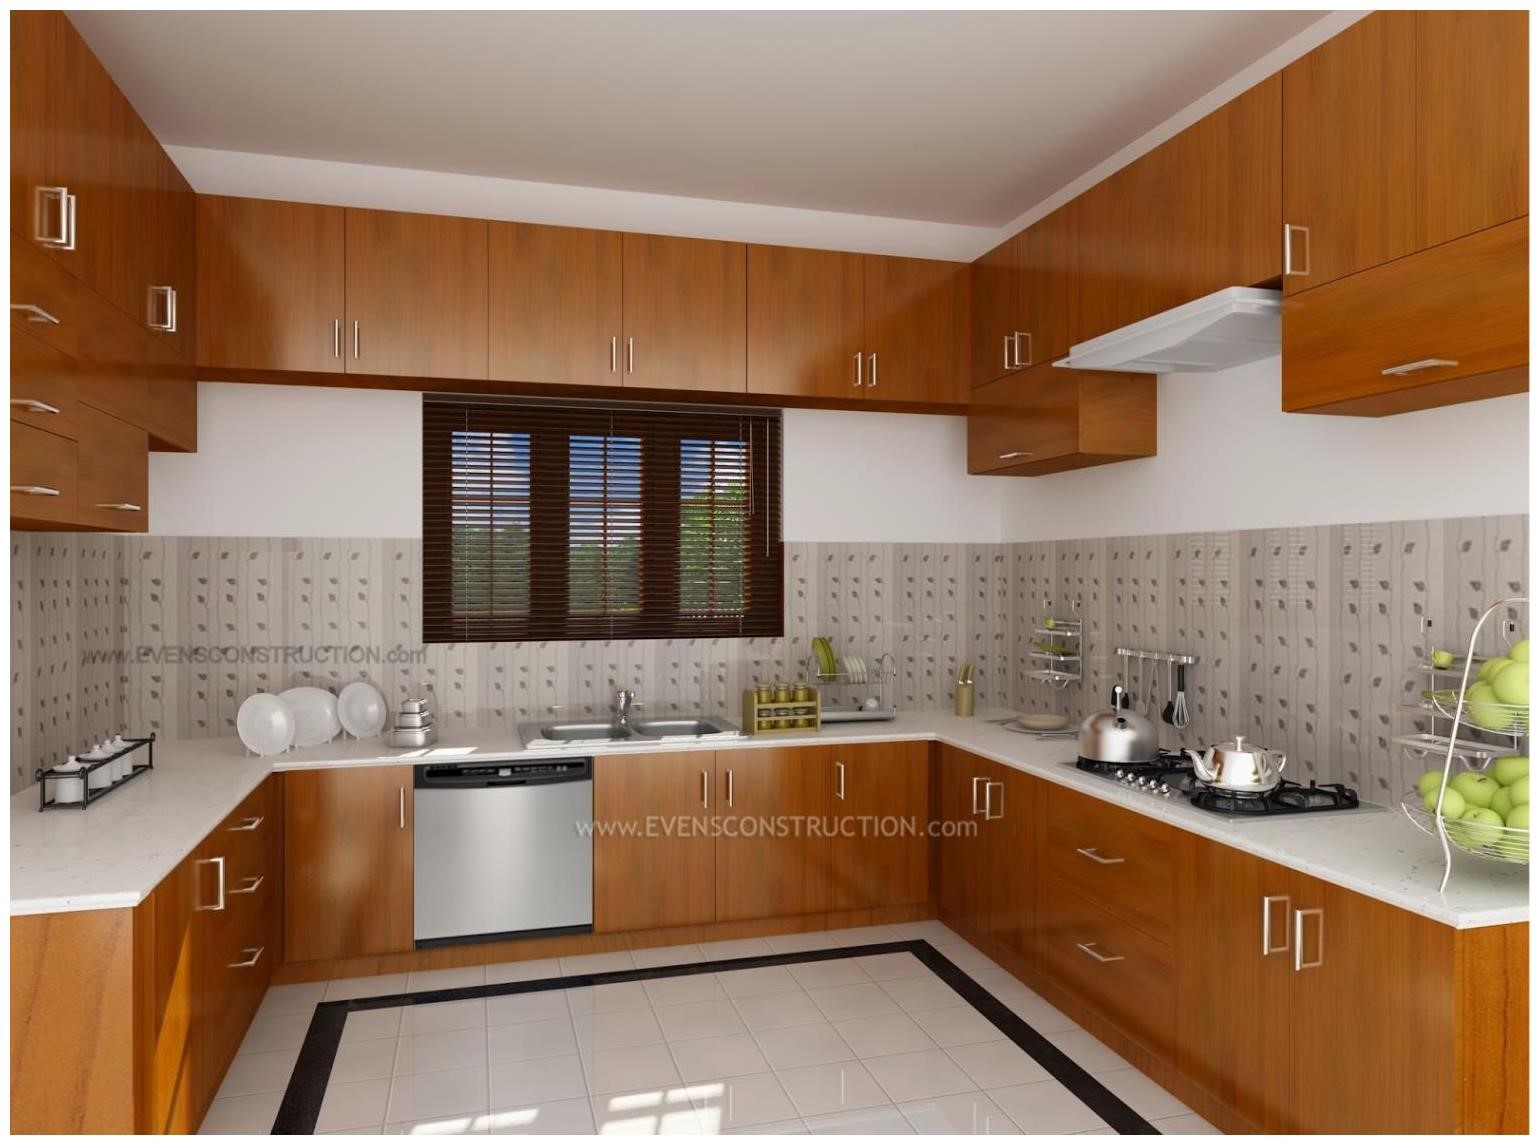 16 New Design Of Modular Kitchen Kerala Kitchen Cabinets Designs Photos House Decor Brilliant New  New,Design,Of,Modular,Kitchen